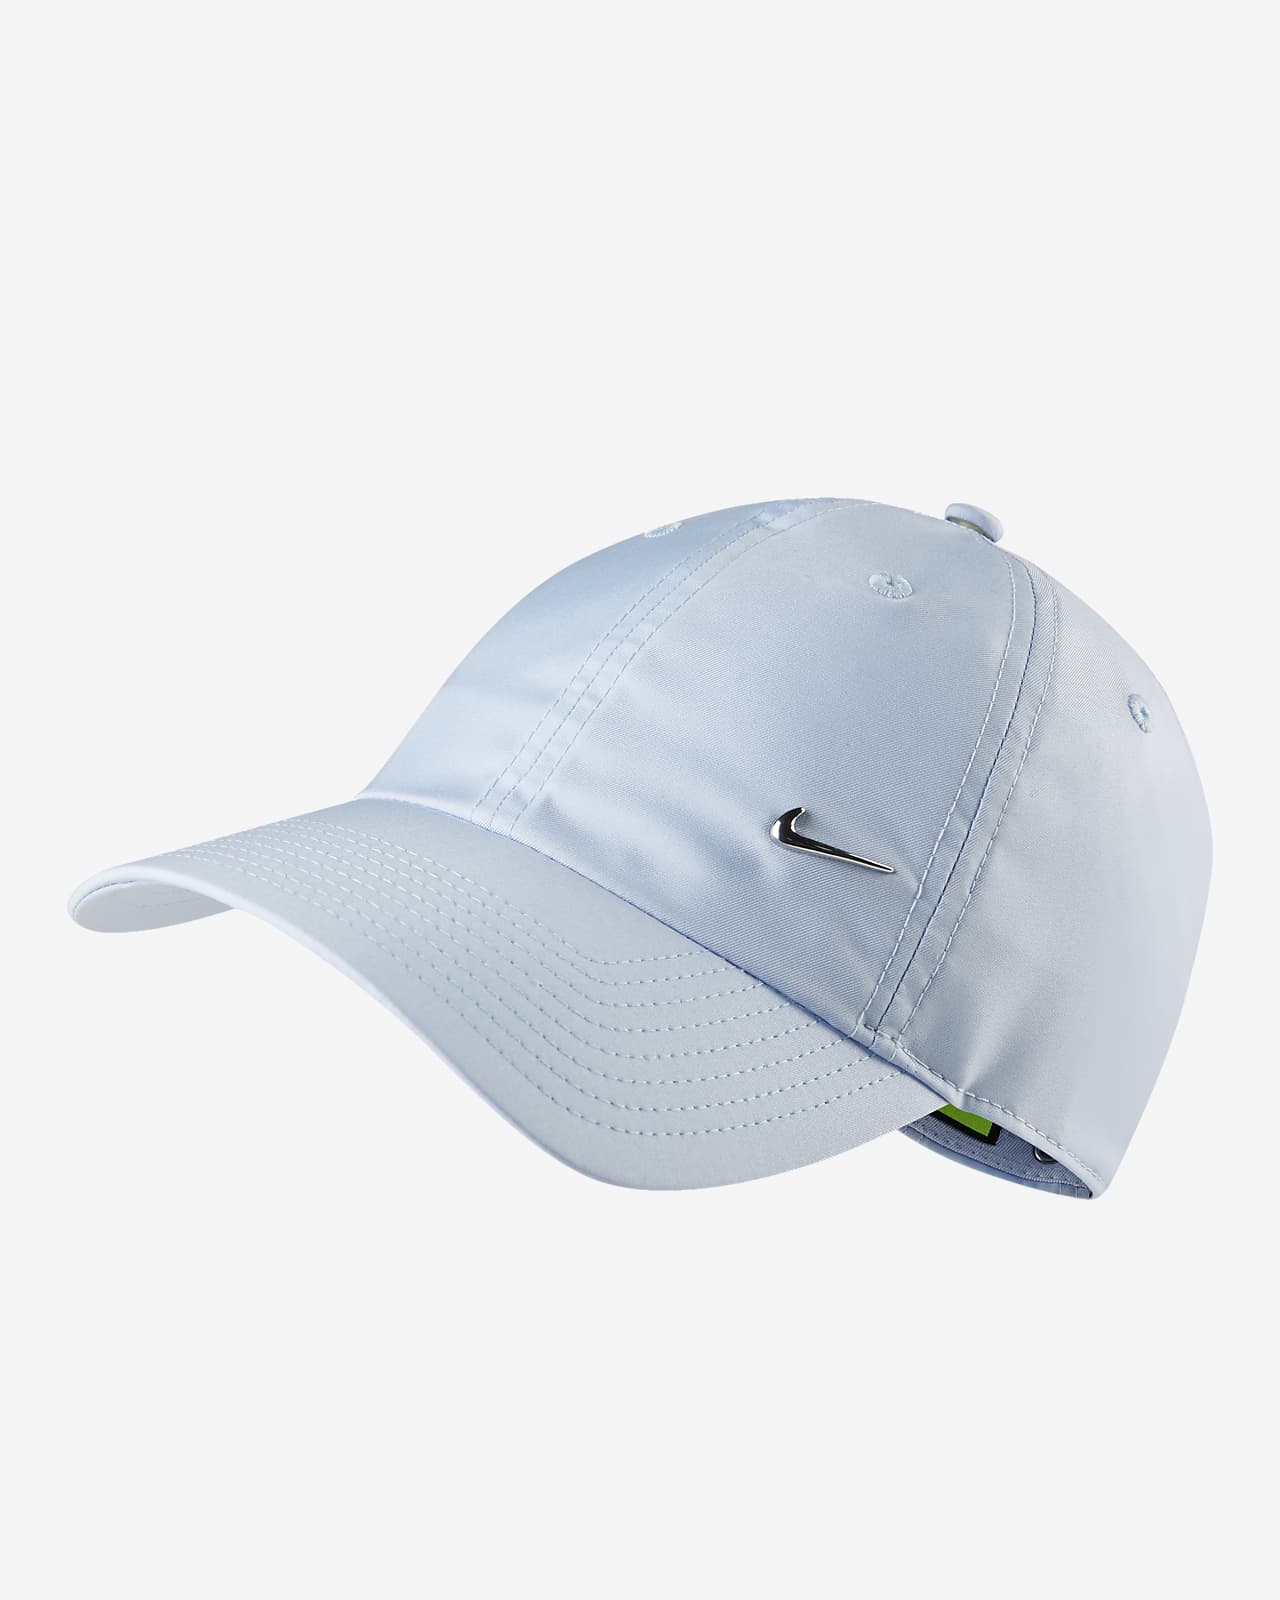 Nike Sportswear Heritage 86 运动帽